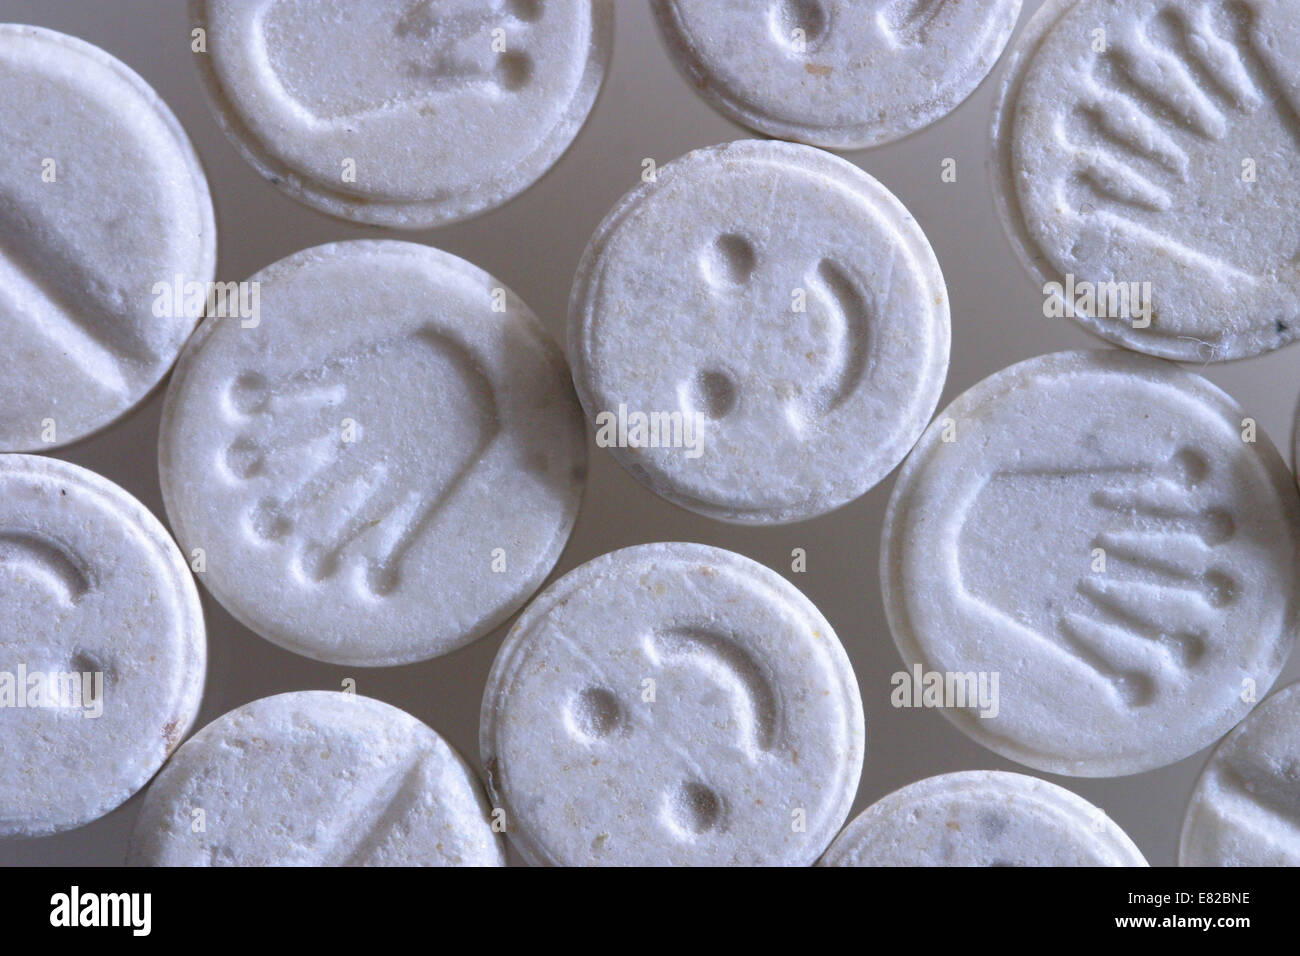 E L'Ecstasy pilules ou de comprimés close up studio shot méthylènedioxyméthamphétamine. Banque D'Images